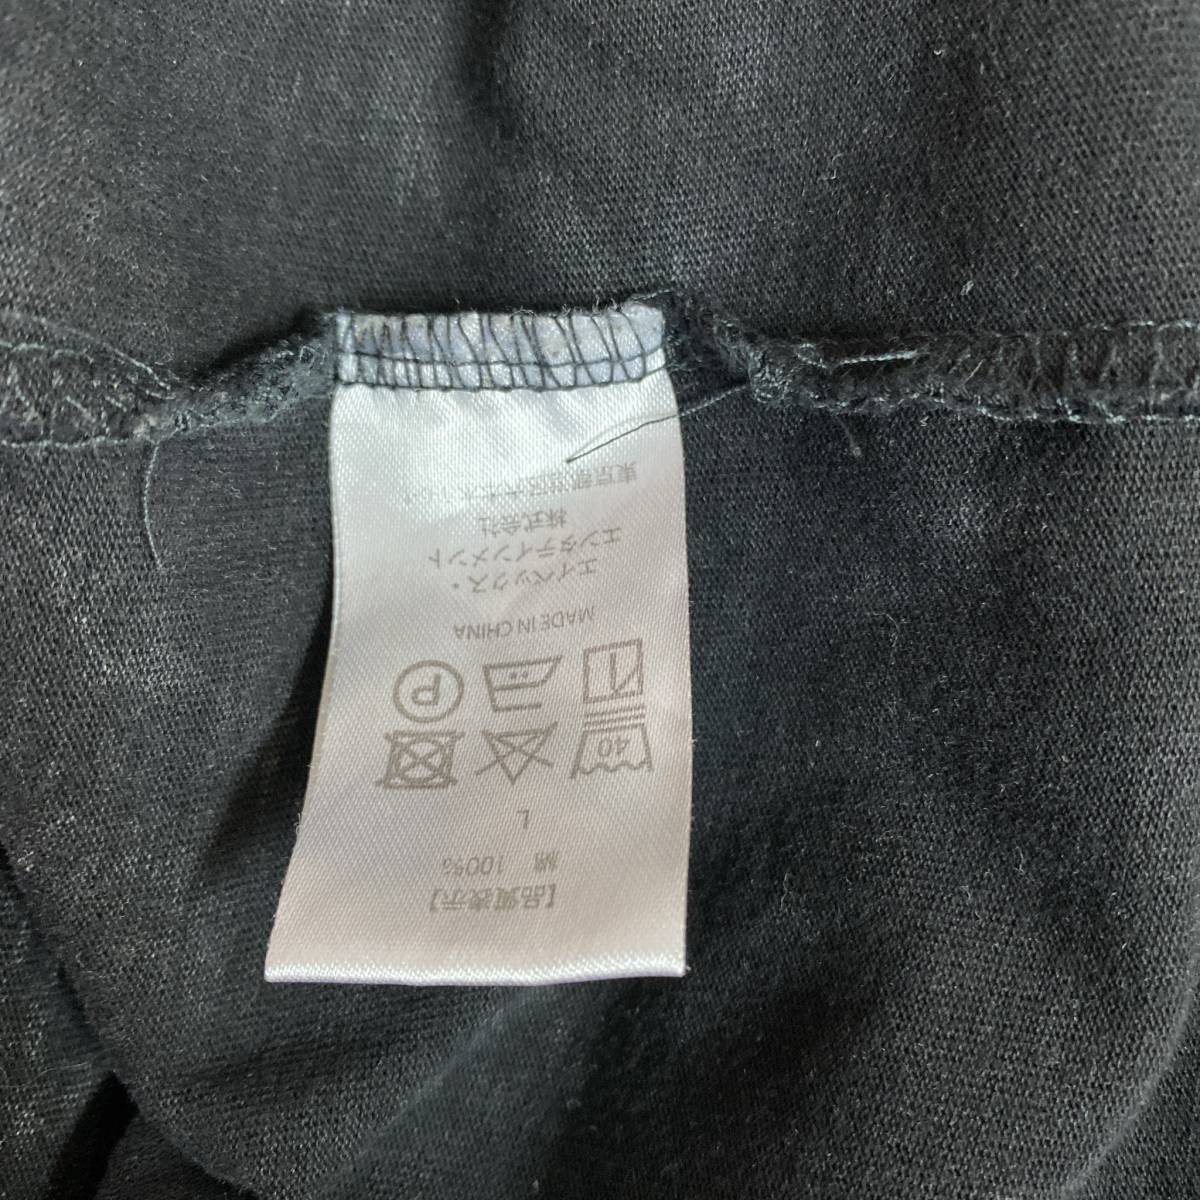 S805 ライブTシャツ Tシャツ 倖田來未 グッズ 半袖 カジュアル L ブラック（黒) コットン 万能 _画像5